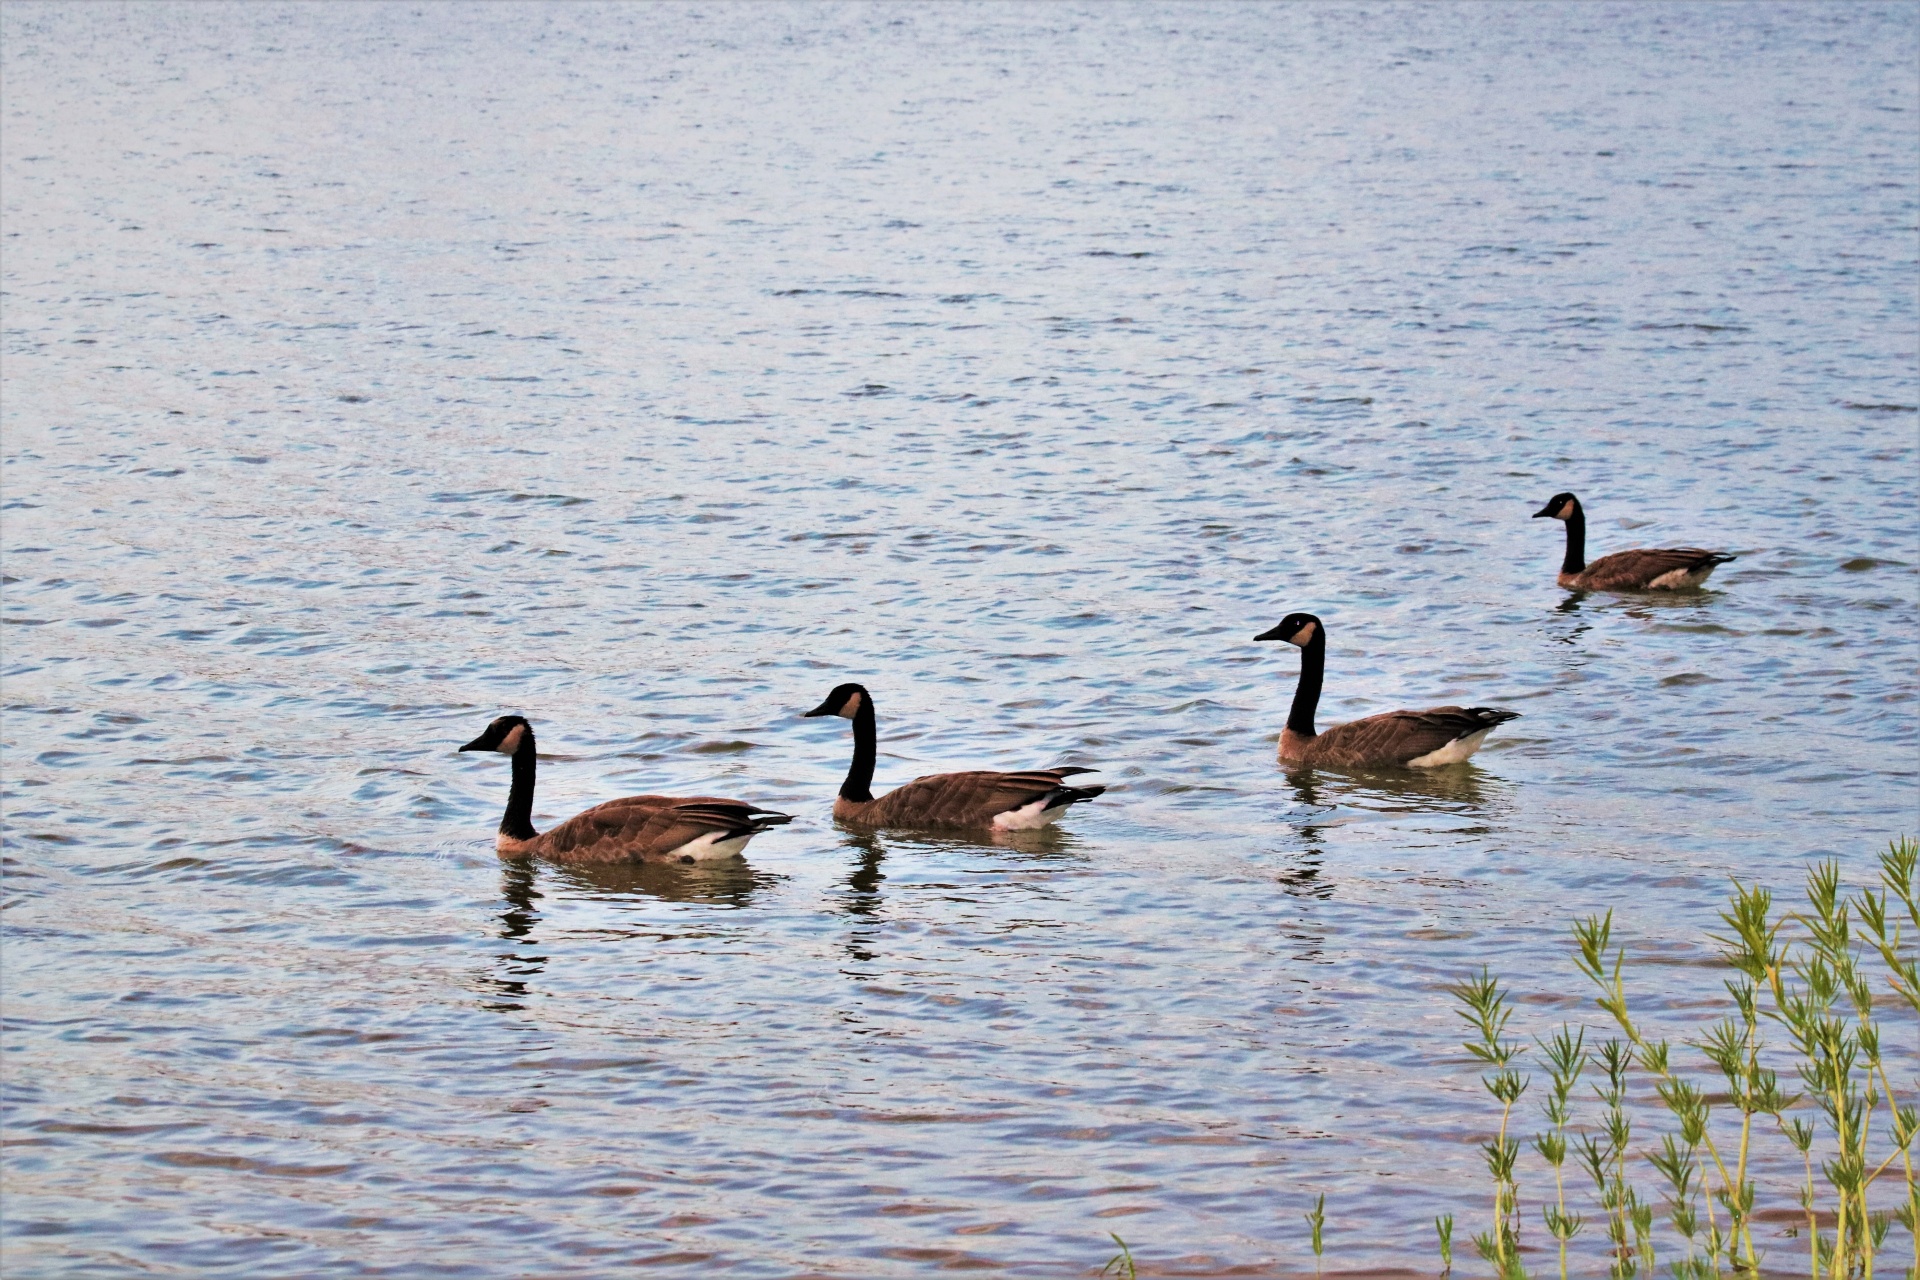 Quatro gansos do Canadá nadando no lago